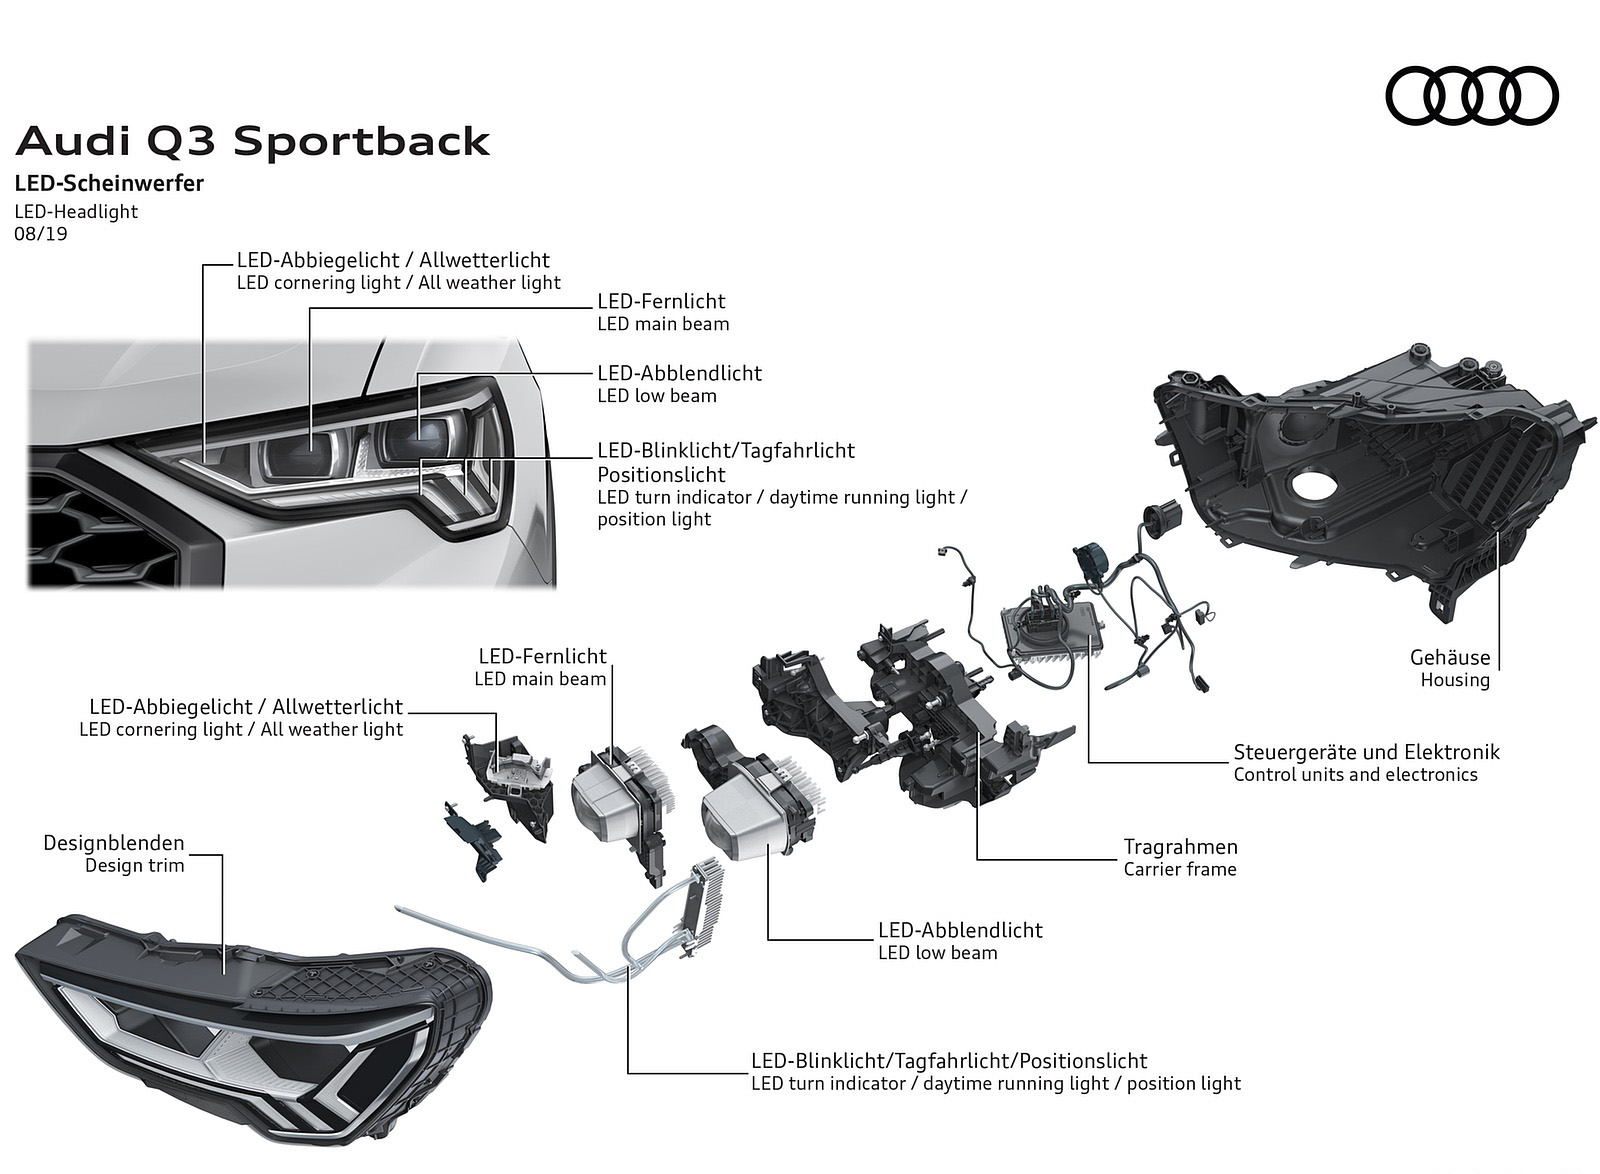 2020 Audi Q3 Sportback LED-Headlight Wallpapers #273 of 285